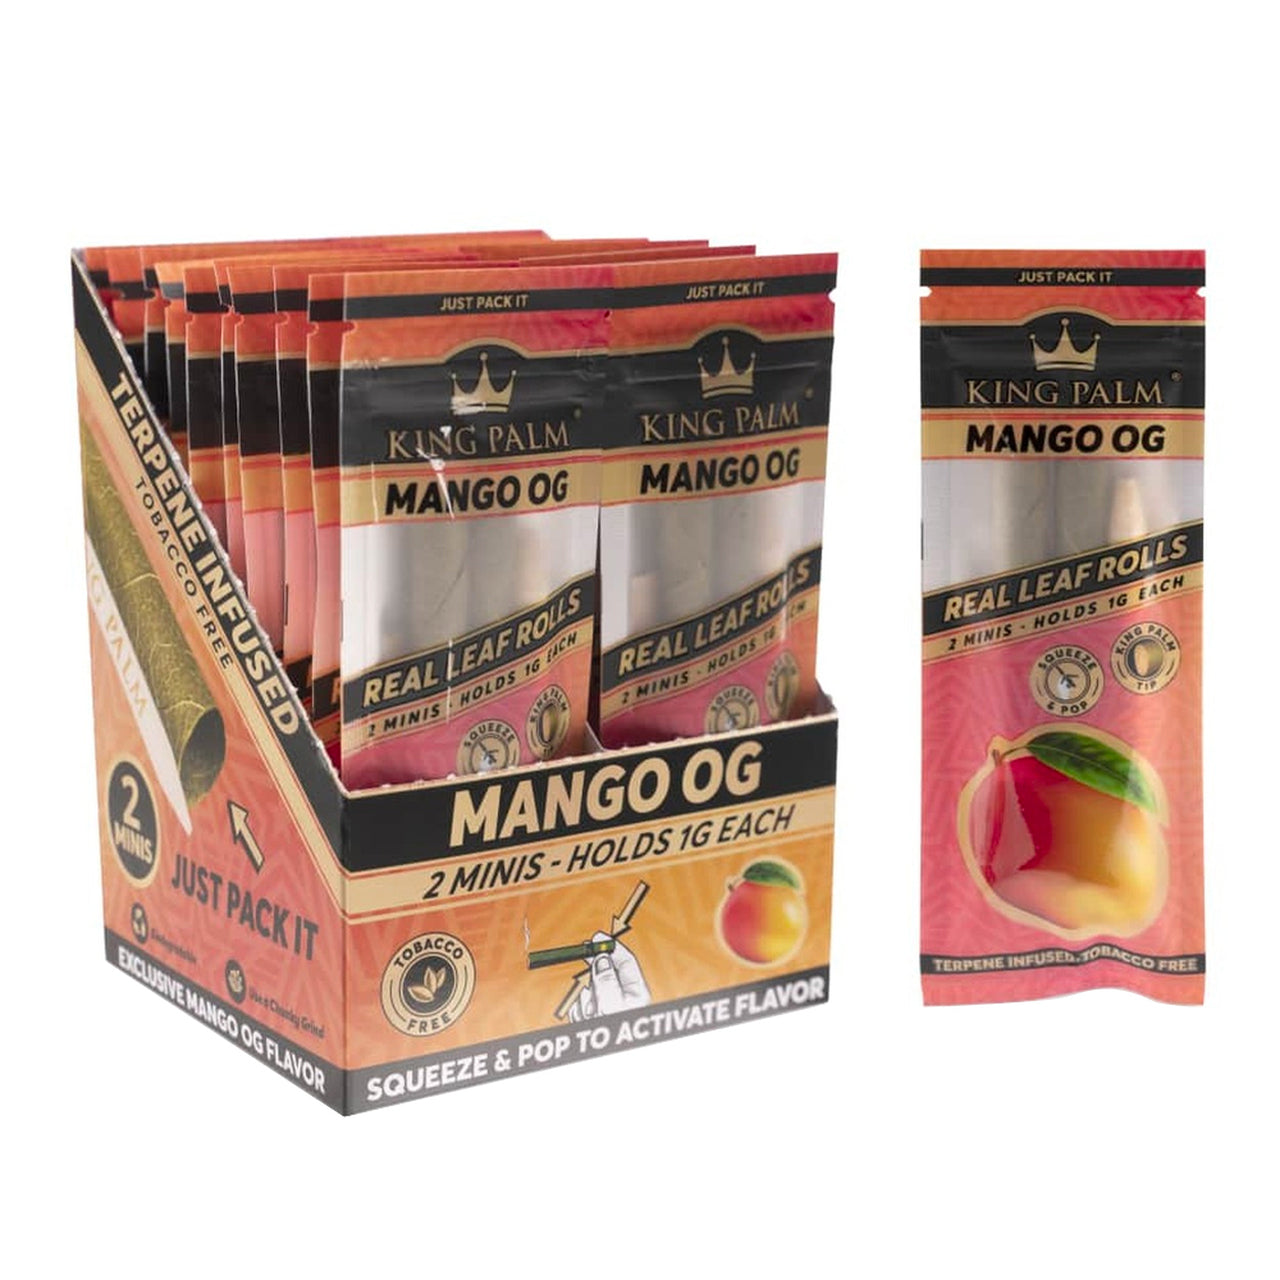 King Palm Mango OG 2 pack